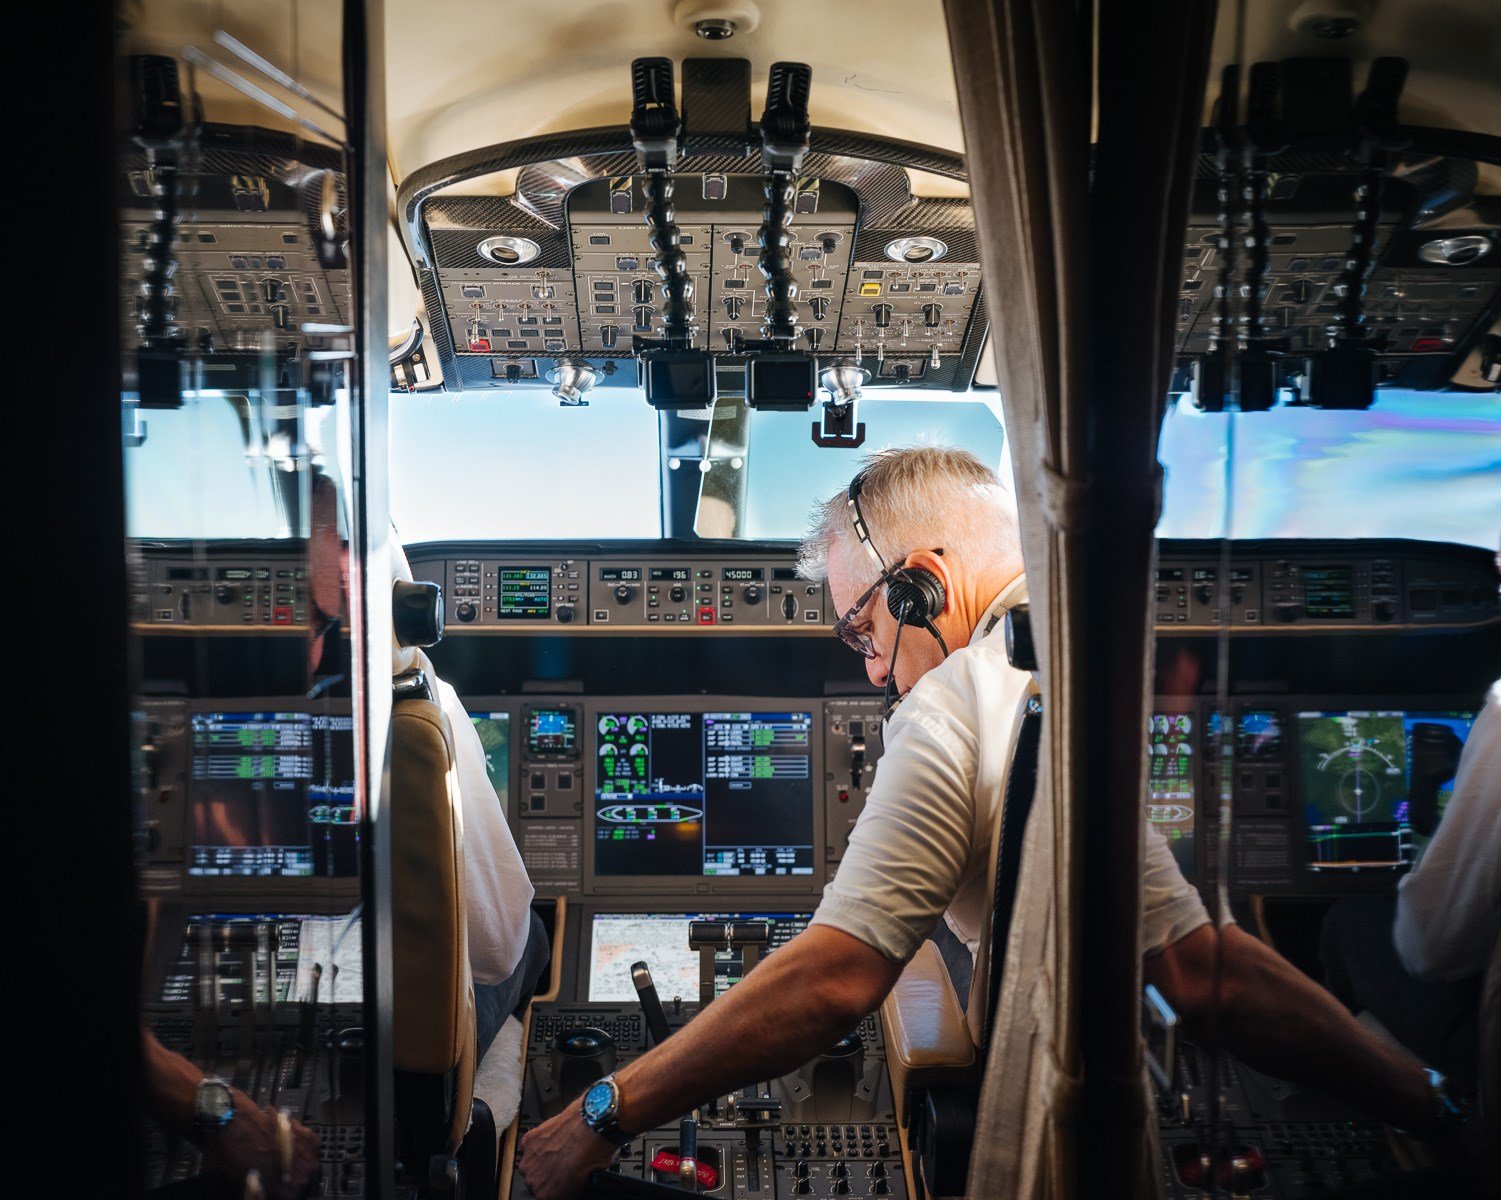 VistaJet Private Jet Leasing: A dedicated crew